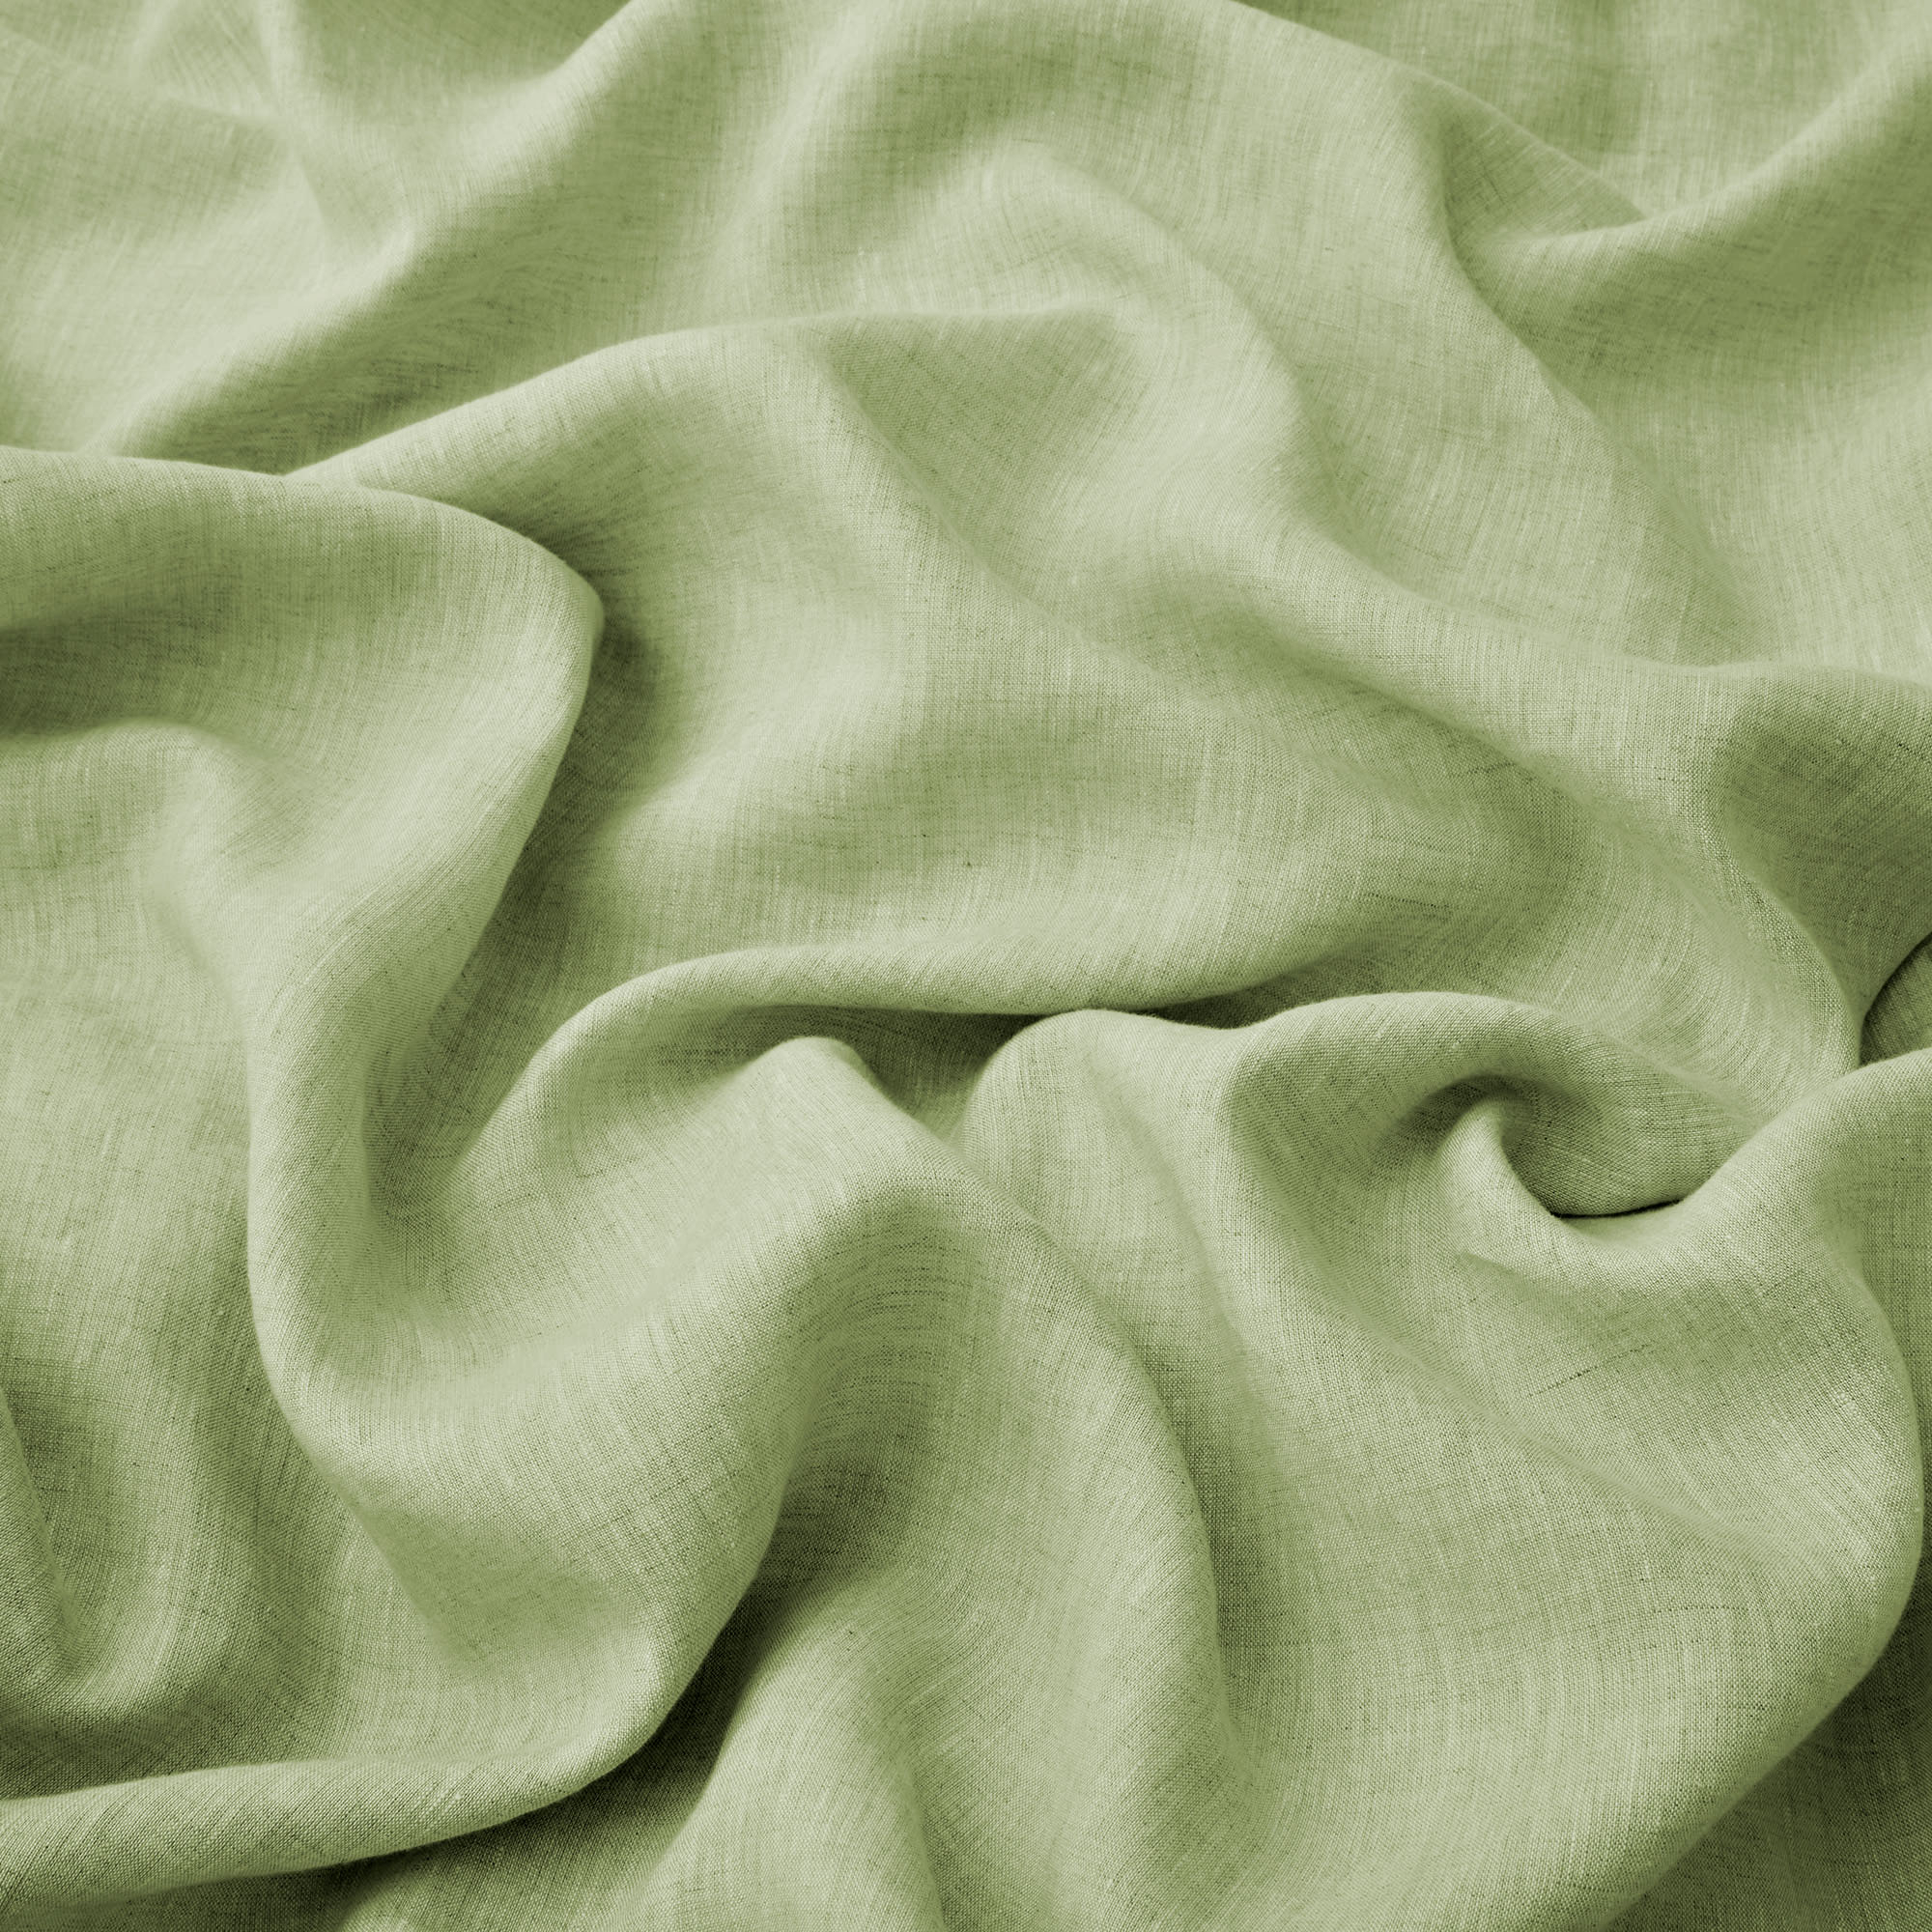 Premium Flax Linen Duvet Cover Set With Pillow Shams Breathable Moisture Wicking Bedding Set - Light Green, King